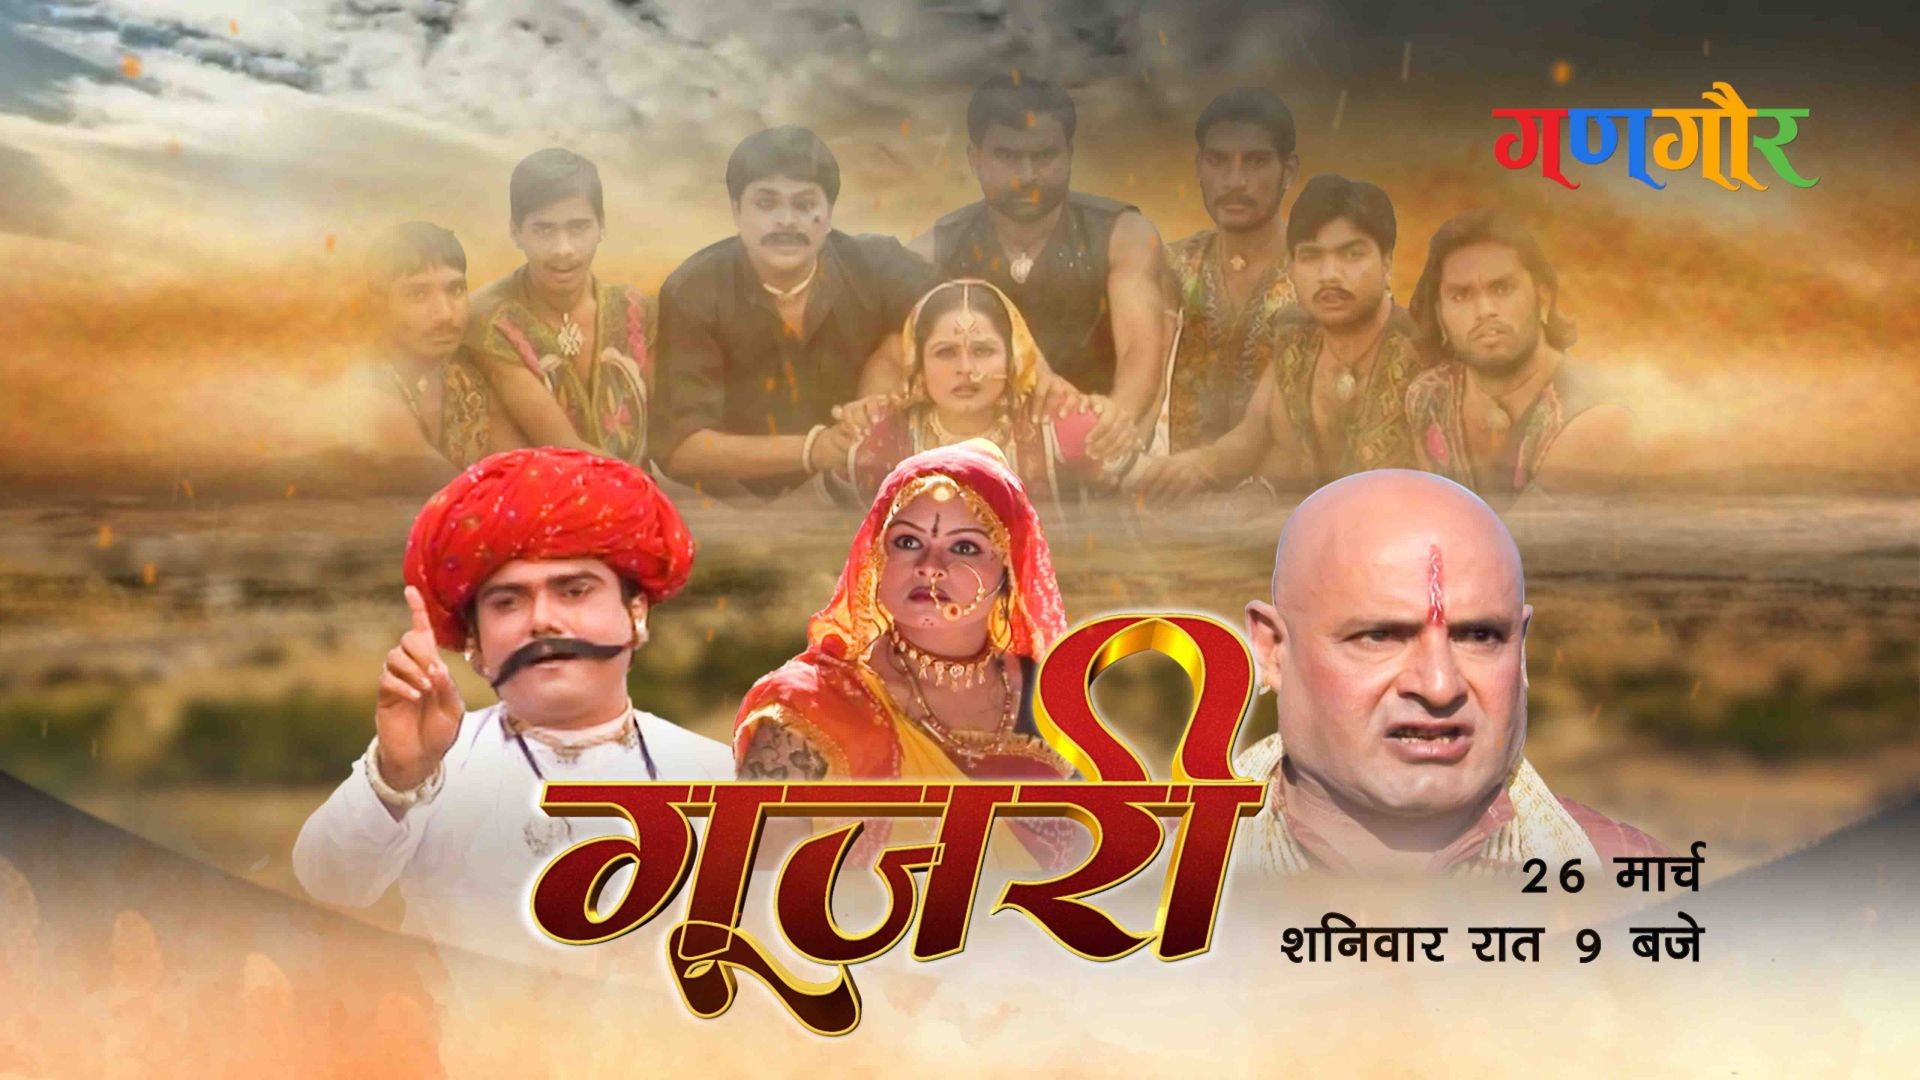 गूजरी (Gujari) — Movie Promo | Rajasthani Film | Gangaur TV | Krazzy4Gangaur | Usha Jain Starer